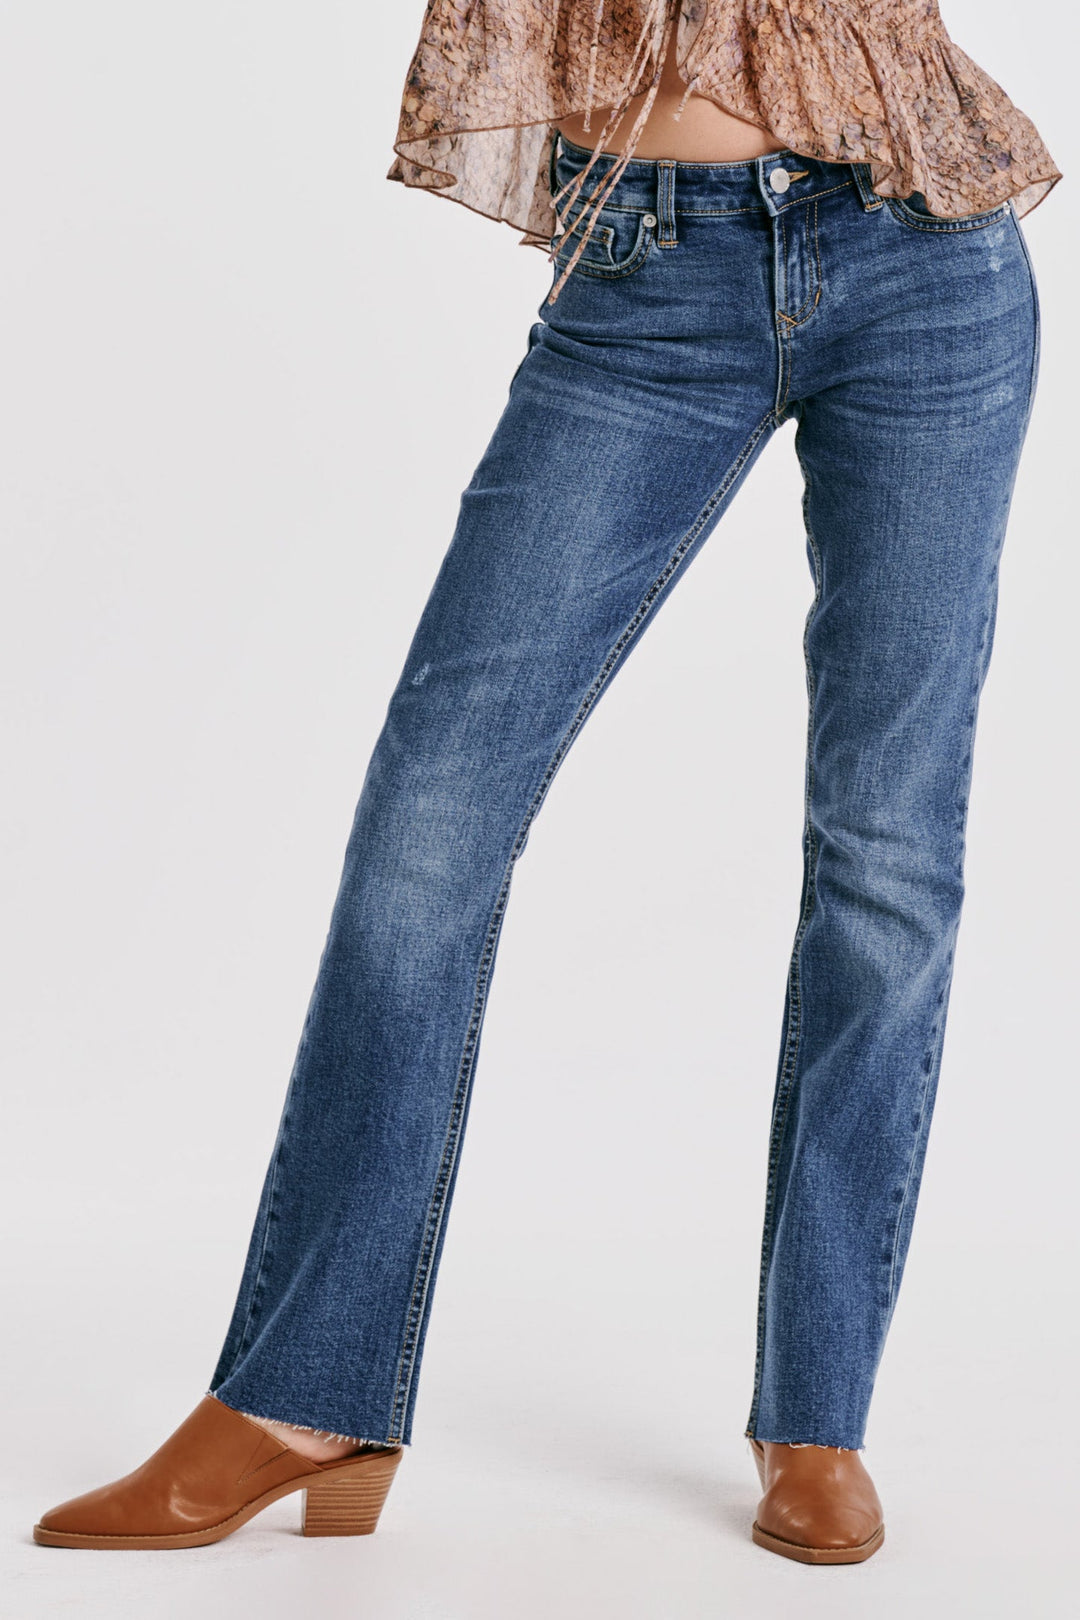 blaire-high-rise-slim-straight-jeans-lillie